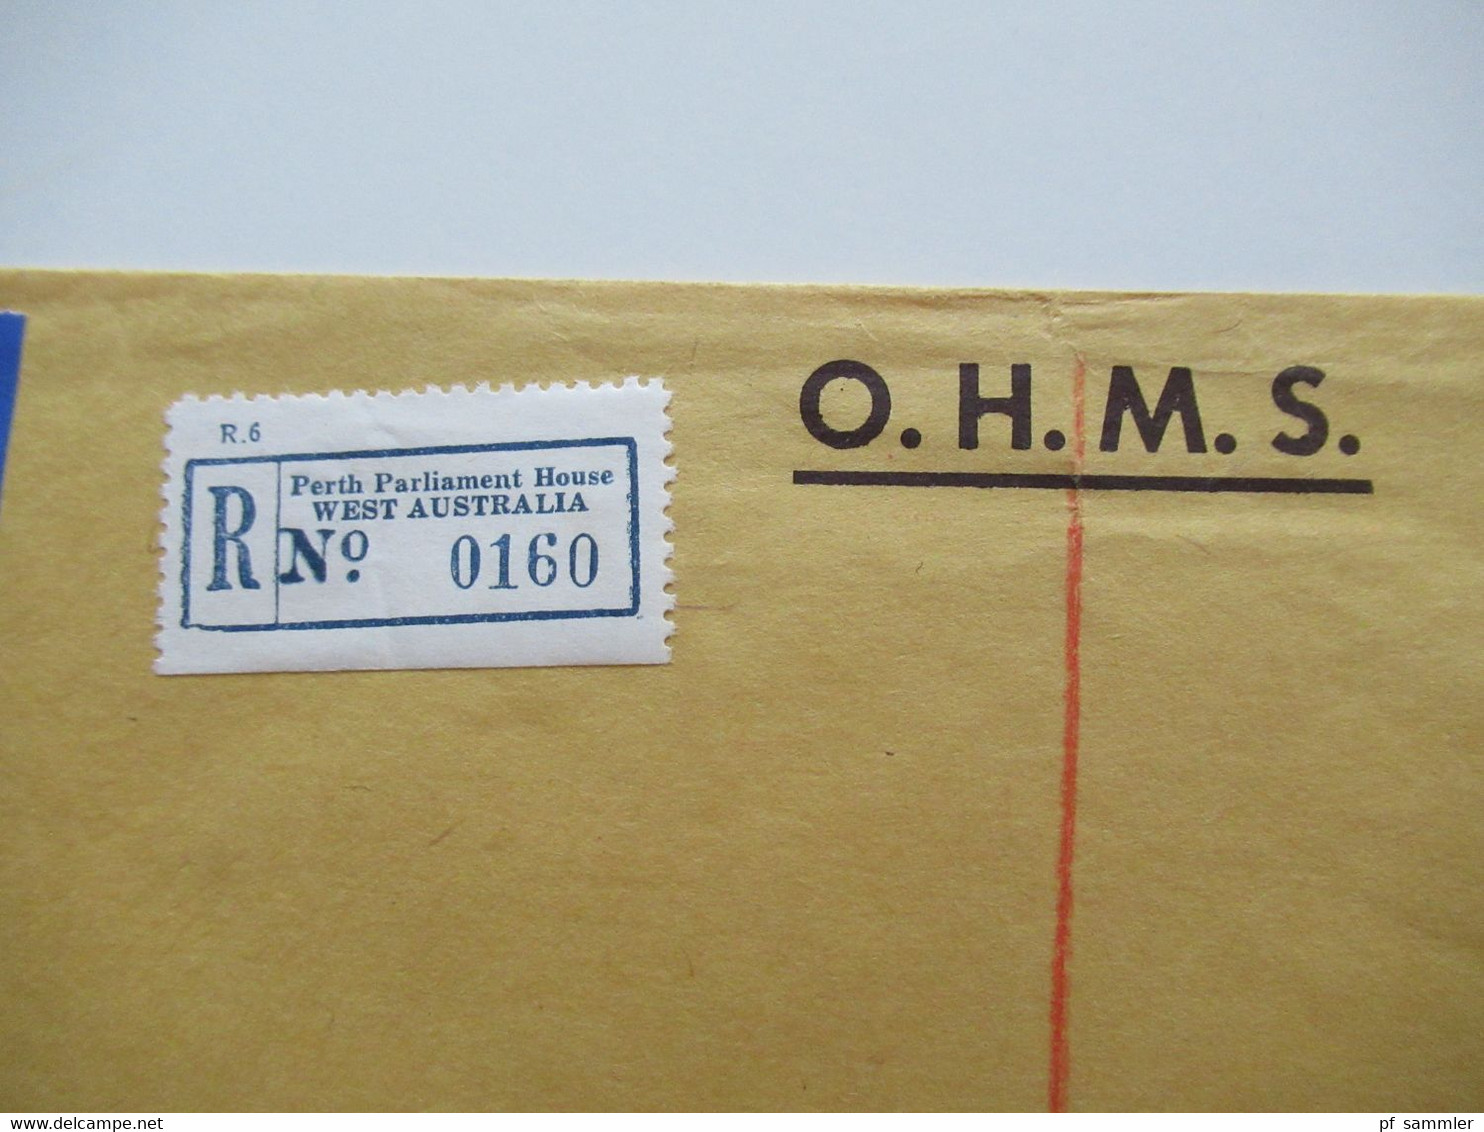 1980 Umschlag OHMS Und Stempel Legislative Council Parliament House Perth W.A Einschreiben Perth Parliament House - Lettres & Documents